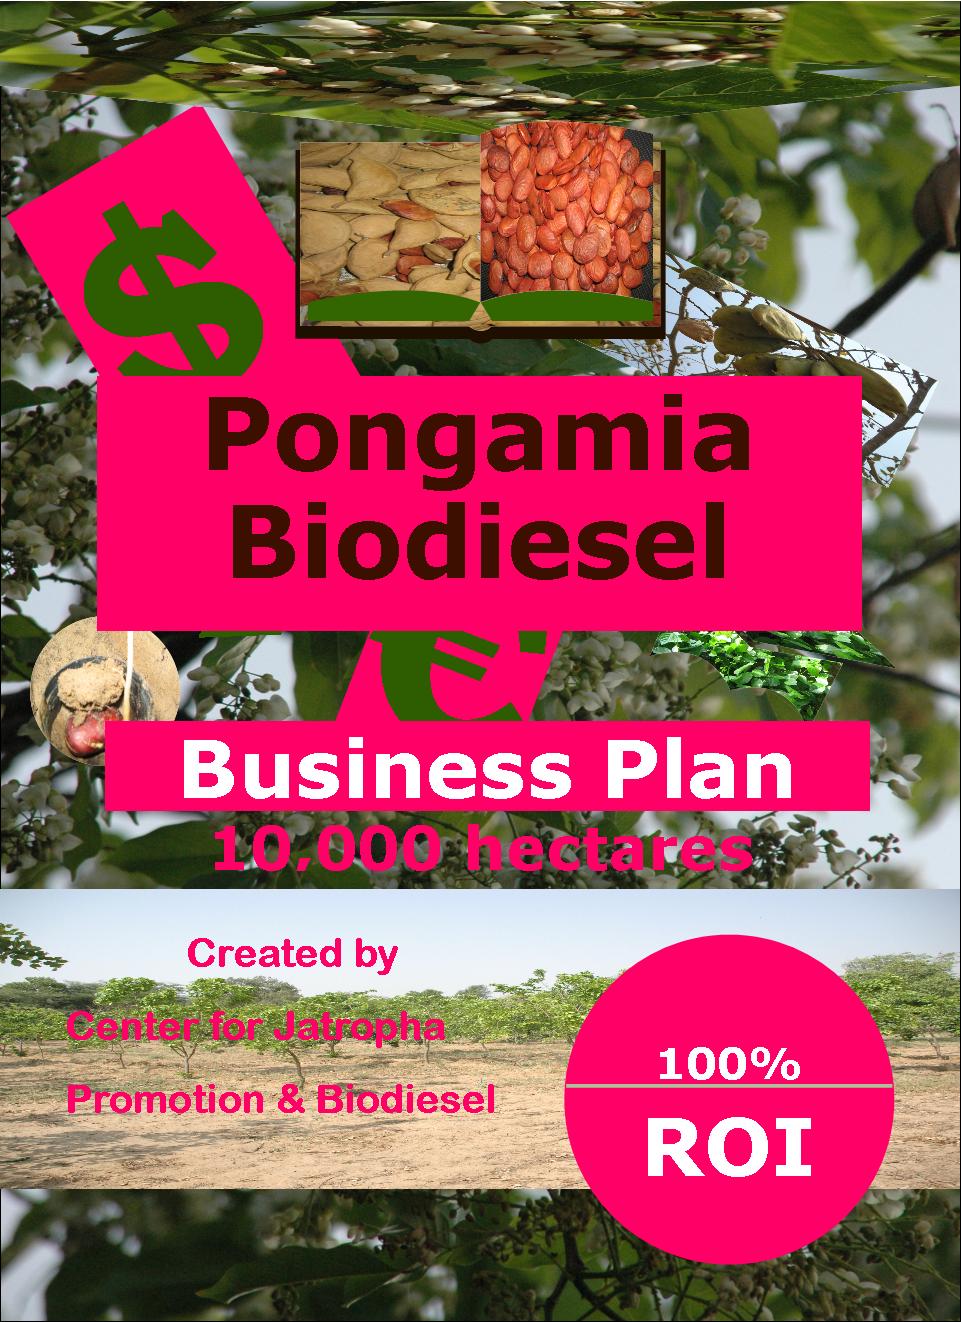 pongamia biodiesel business plan 10000 ha